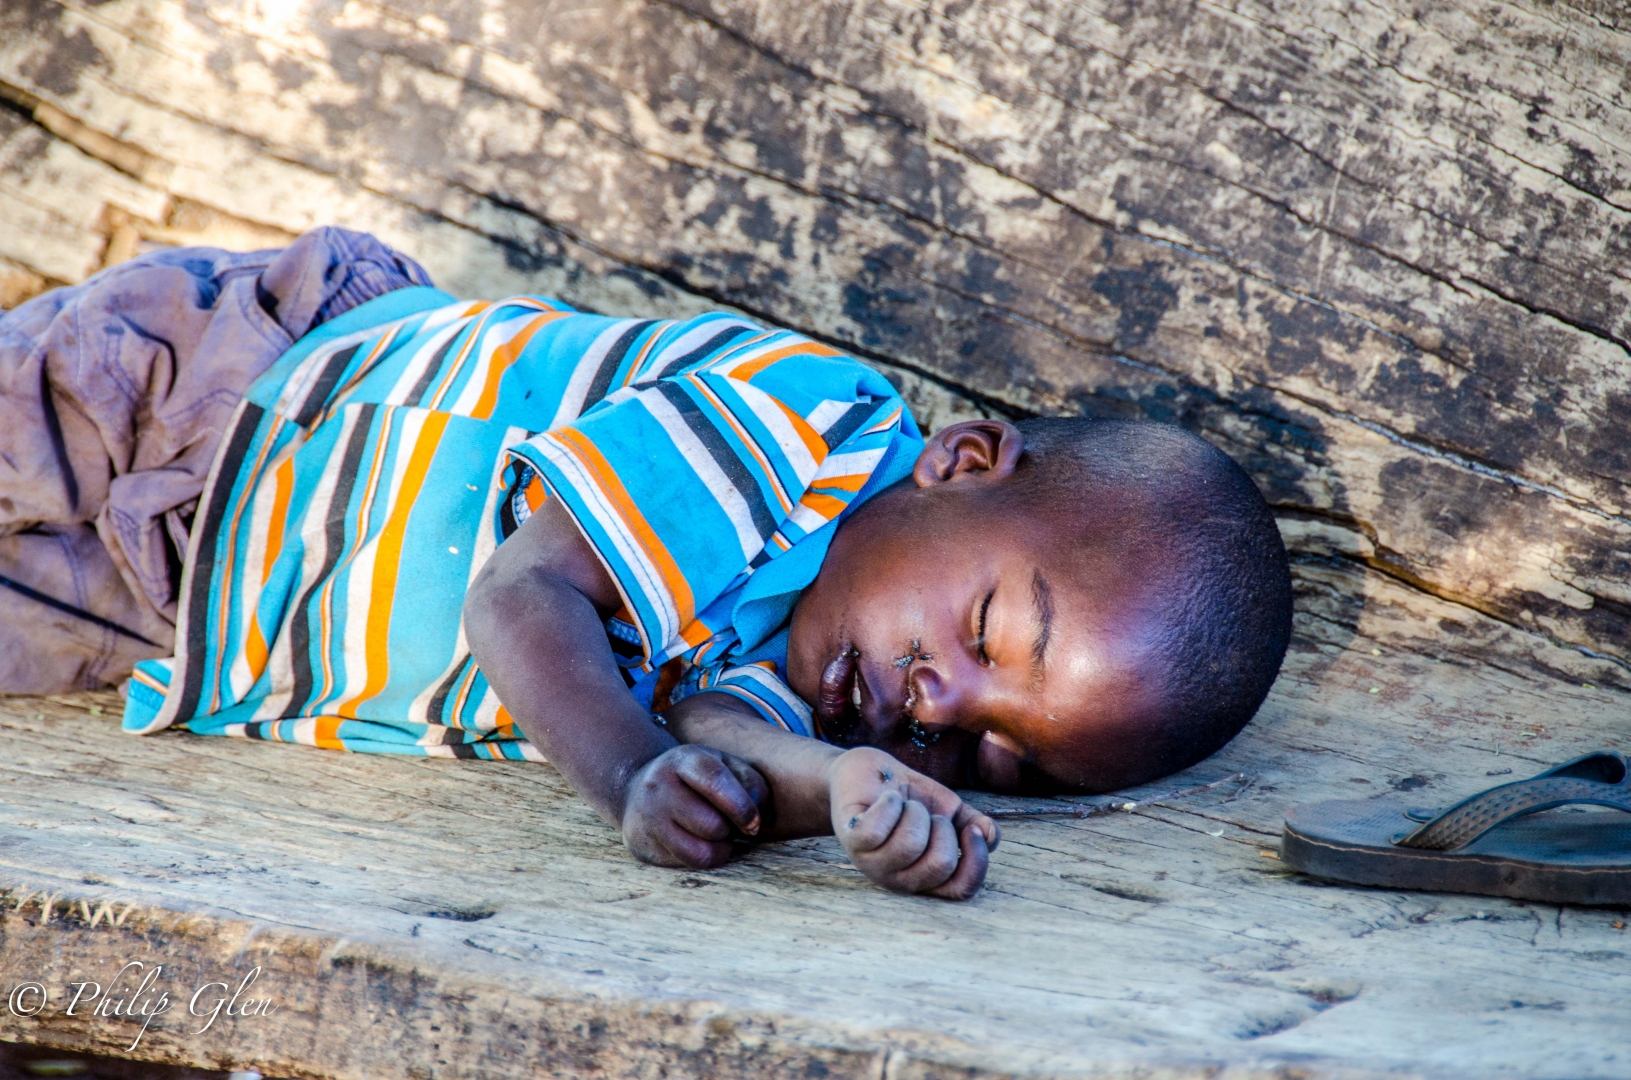 African Village; Infant Sleeping